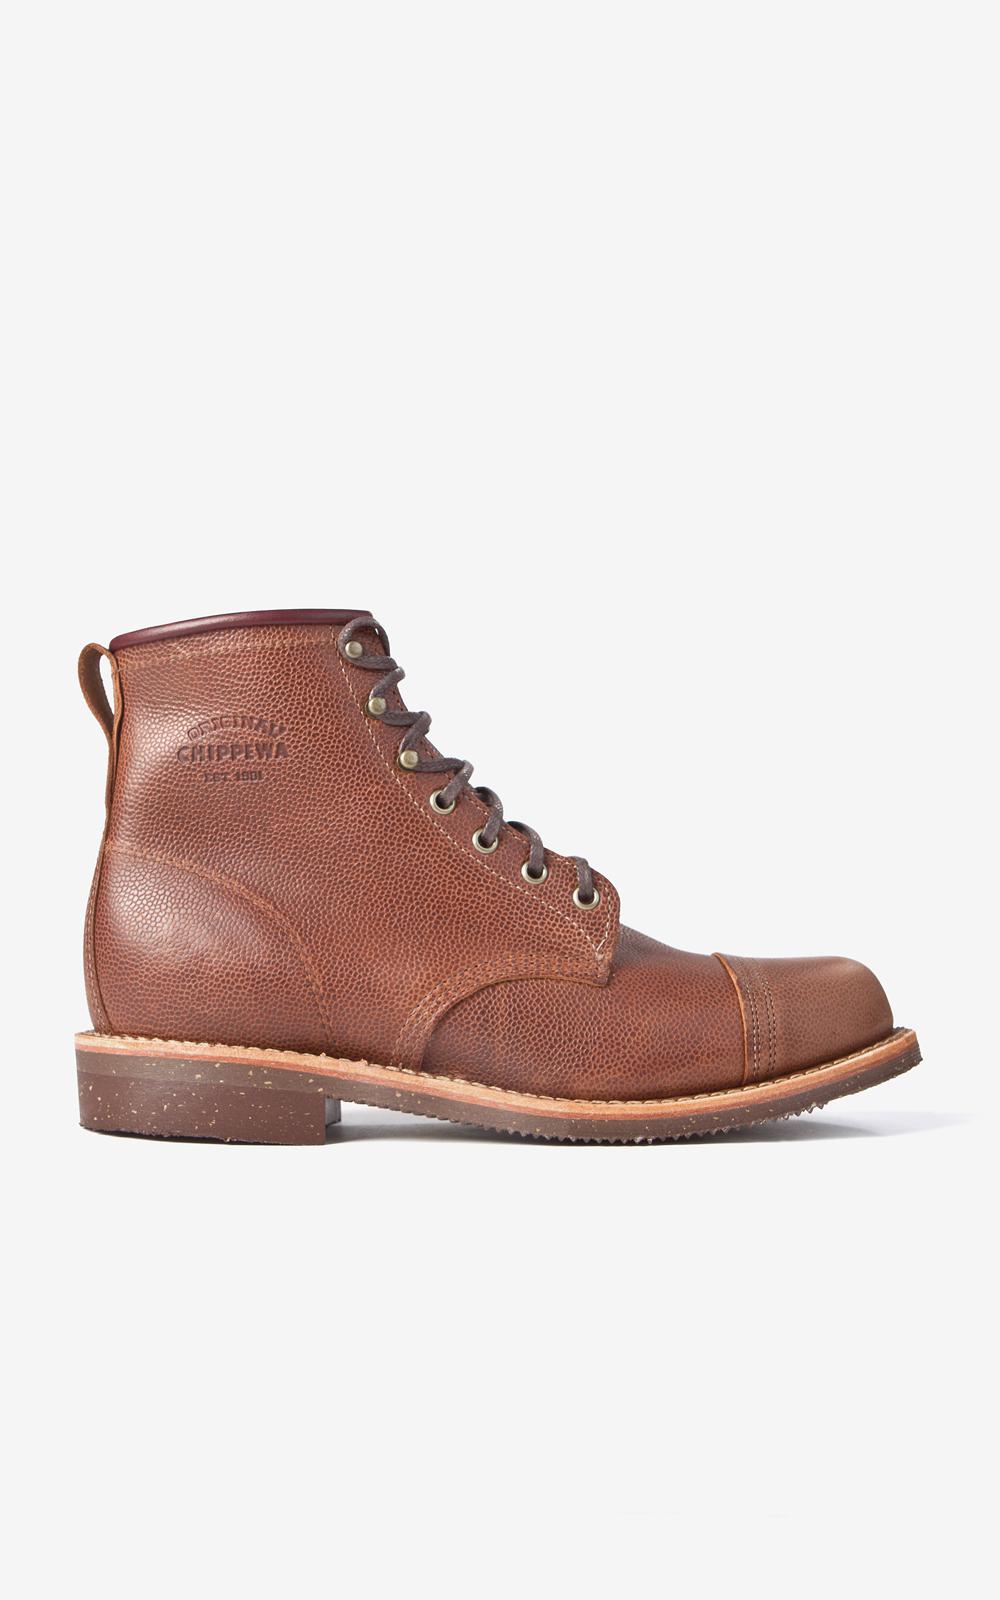 Chippewa Boots Leather Chippewa Homestead Boots Toe Cap Brown Pebbled ...